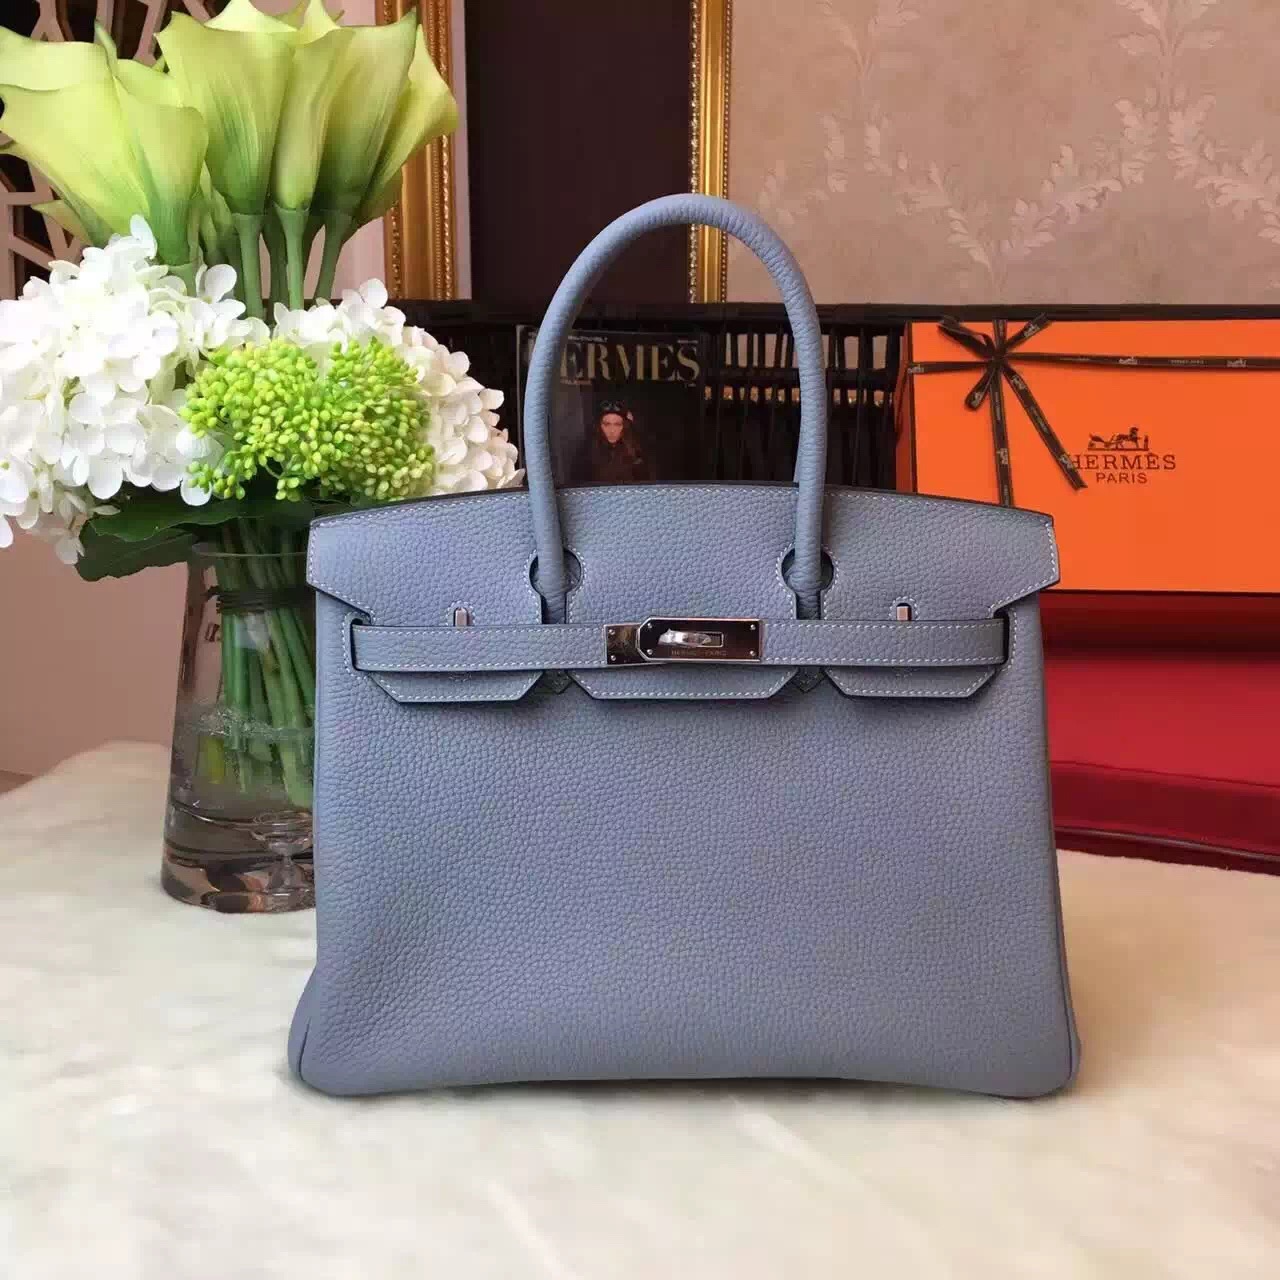 Hermes top leather gray Birkin handbags